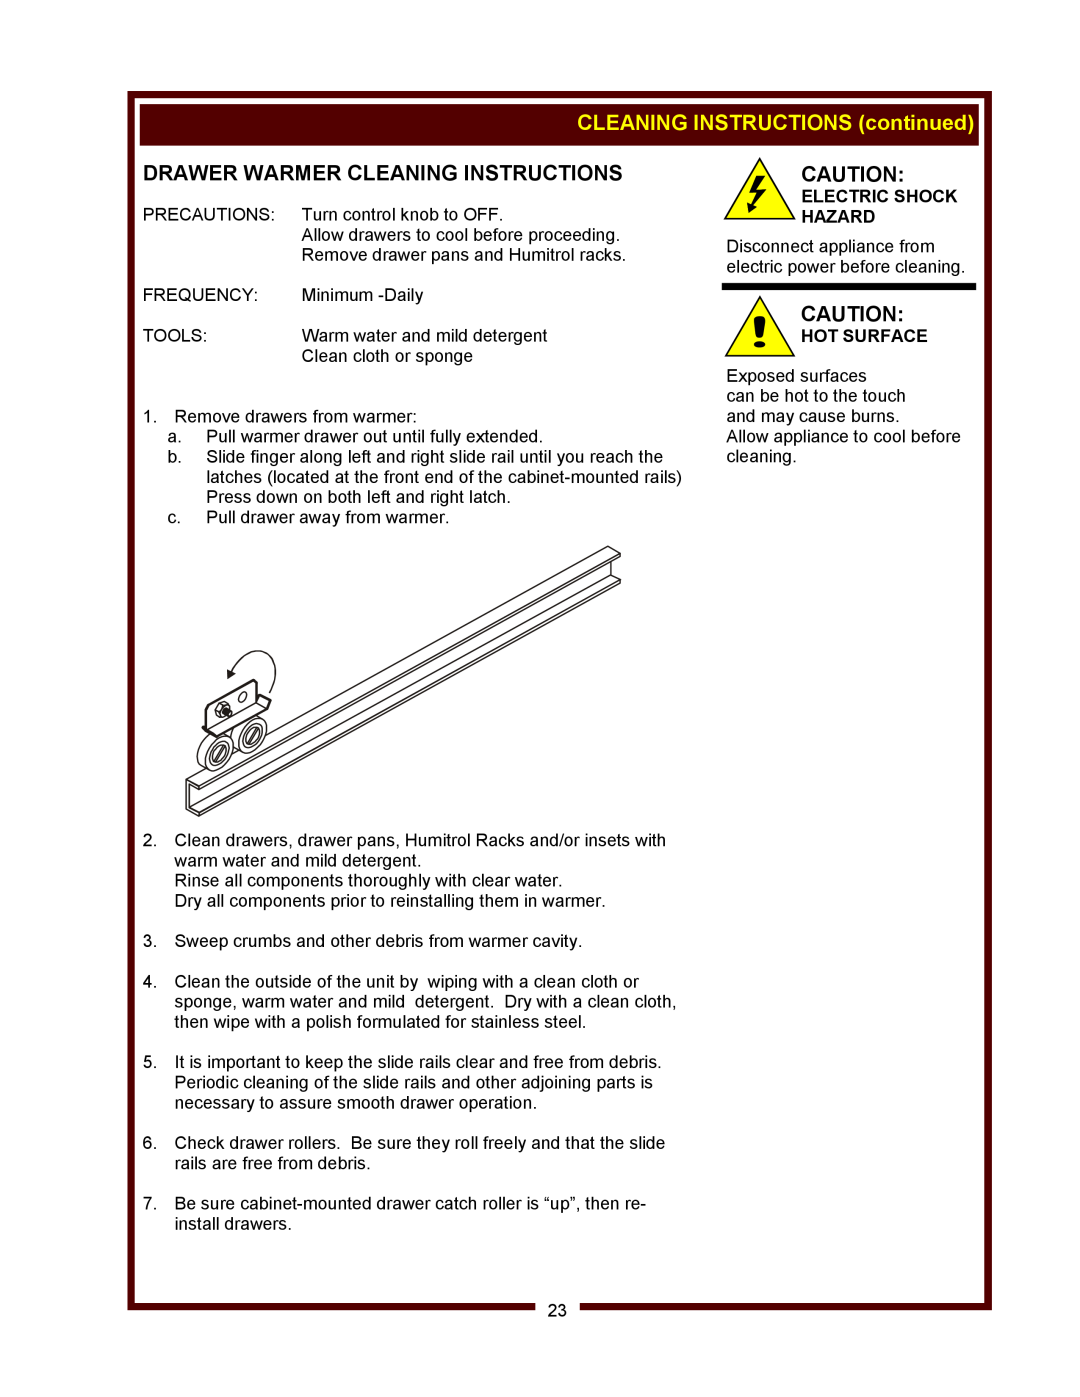 Wells WV-FGRW Drawer Warmer Cleaning Instructions, CLEANING INSTRUCTIONS continued, Electric Shock Hazard, Hot Surface 